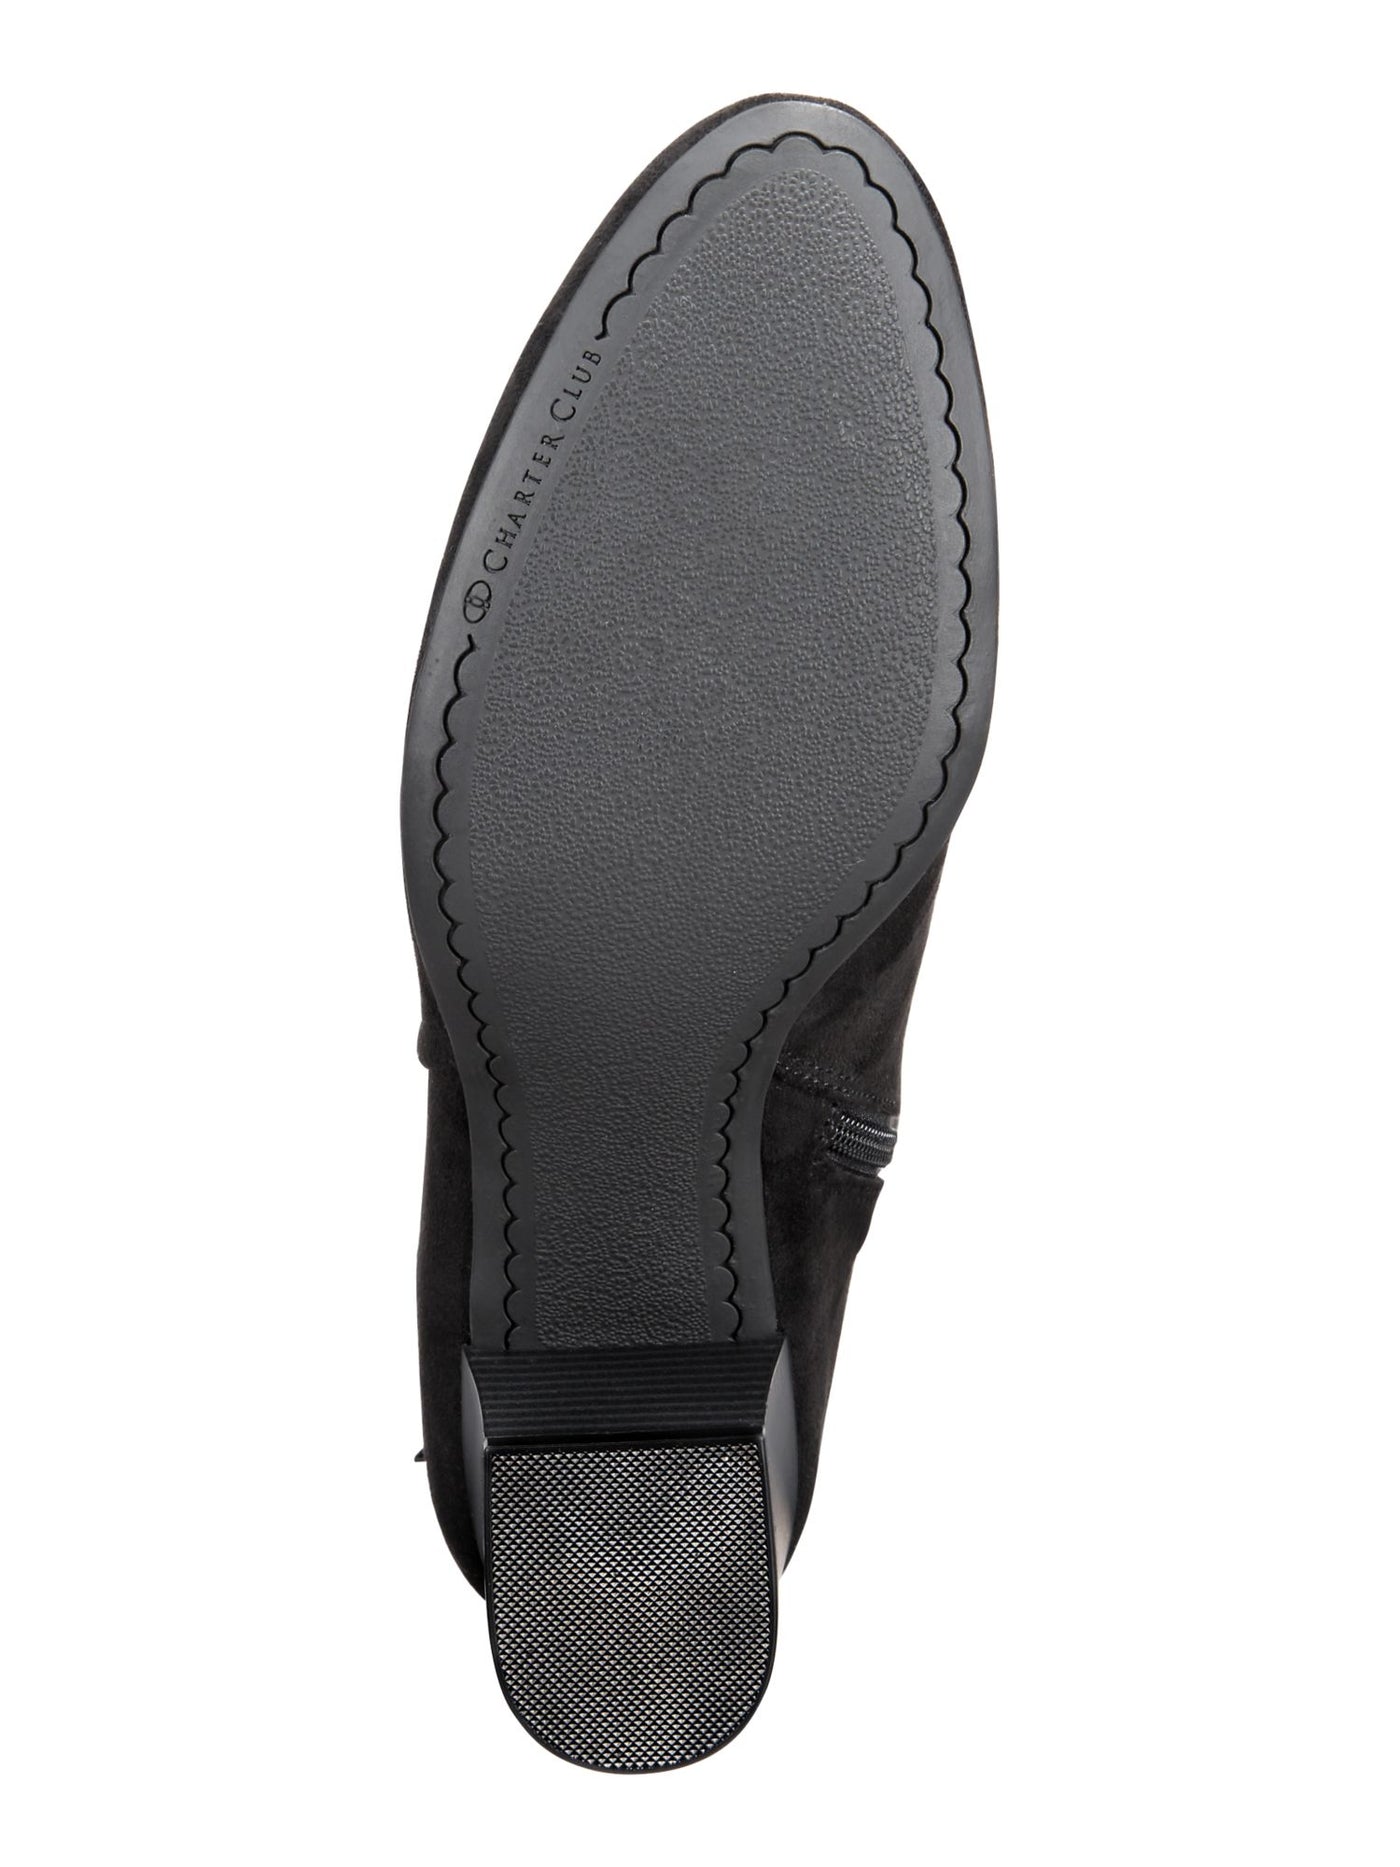 CHARTER CLUB Womens Black Metallic Hardware Slip Resistant Padded Palmaa Almond Toe Block Heel Zip-Up Boots Shoes